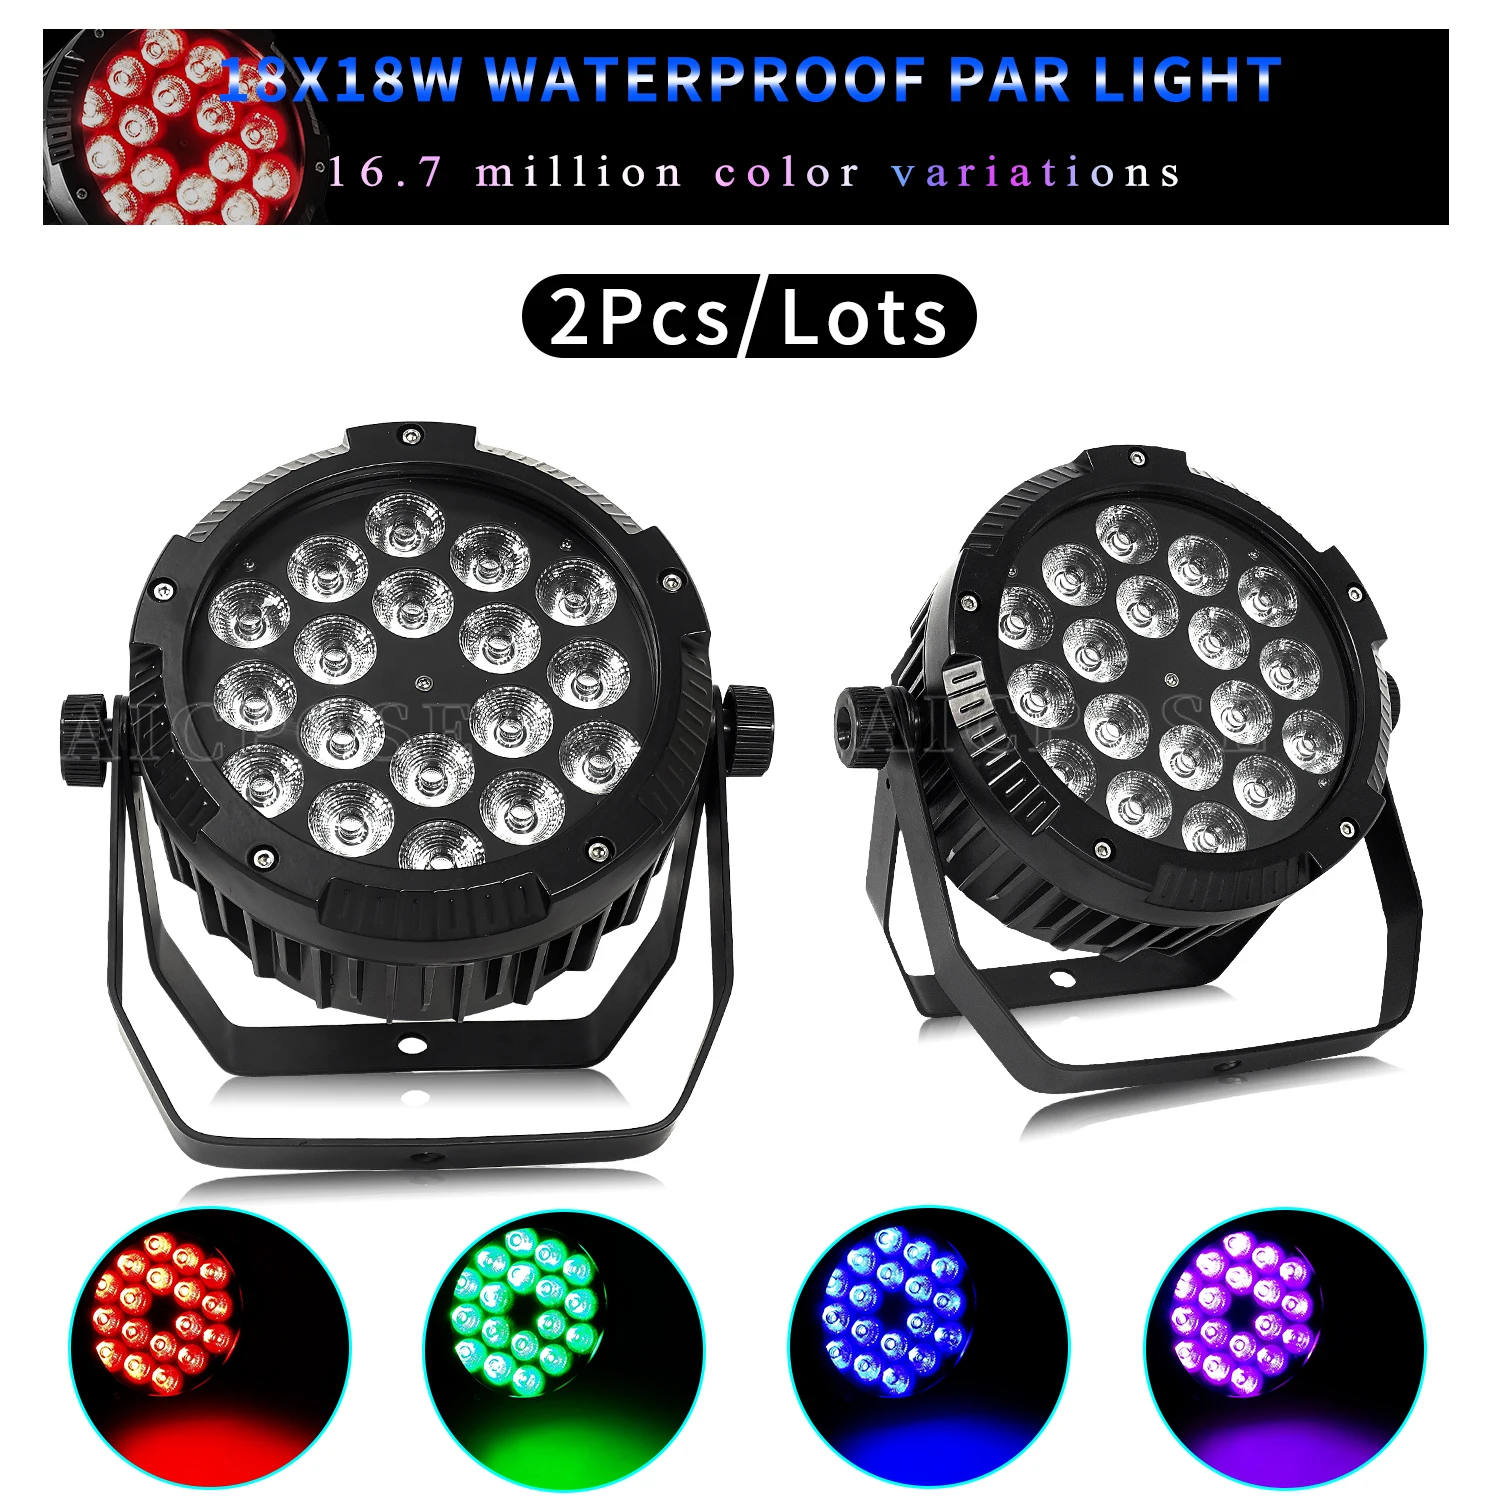 

2Pcs/Lots 18x12W RGBW 4 in 1 18x18W RGBWA UV 6 in 1 LED Par Light IP65 Waterproof Stage Light DMX Controlled DJ Disco Equipment